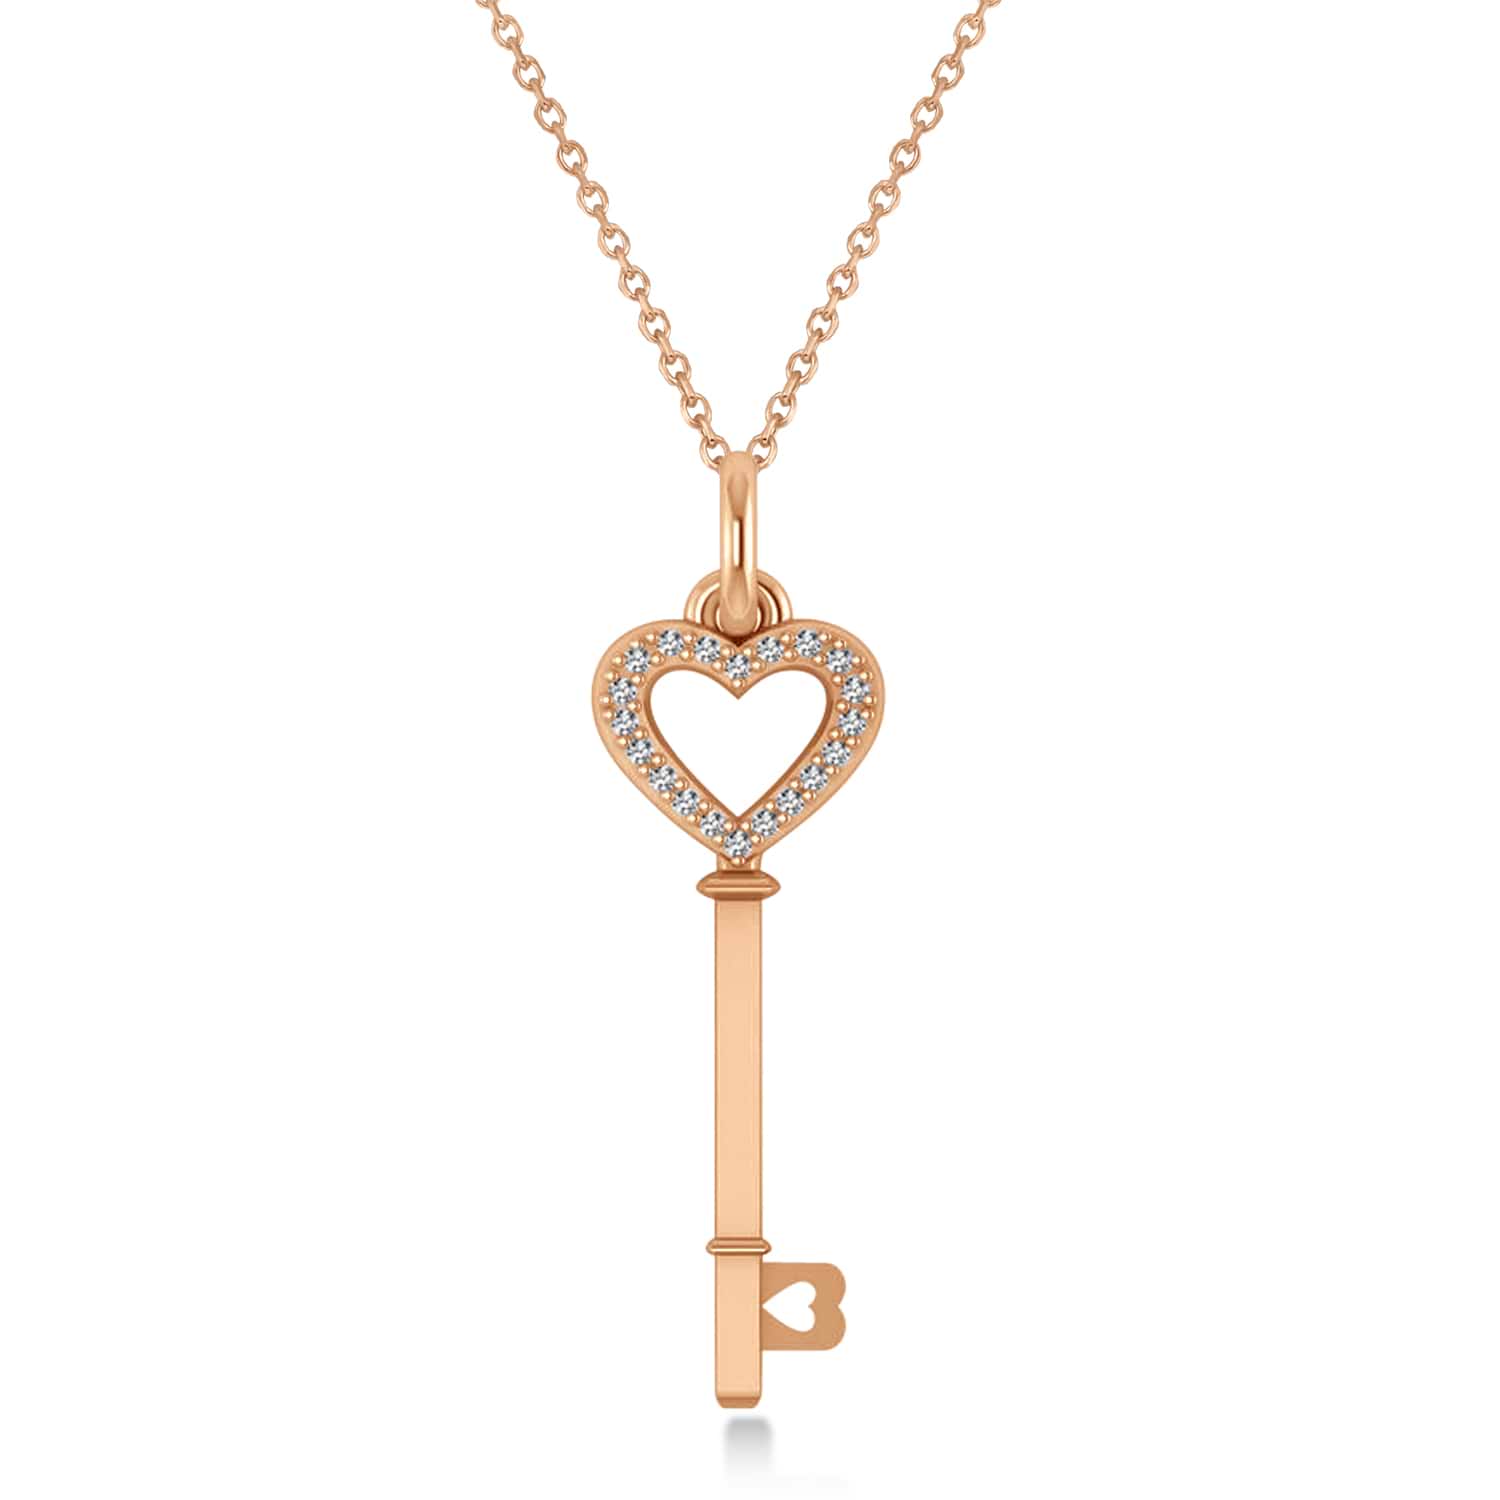 Diamond Heart Key Pendant Necklace 14k Rose Gold (0.10ct)